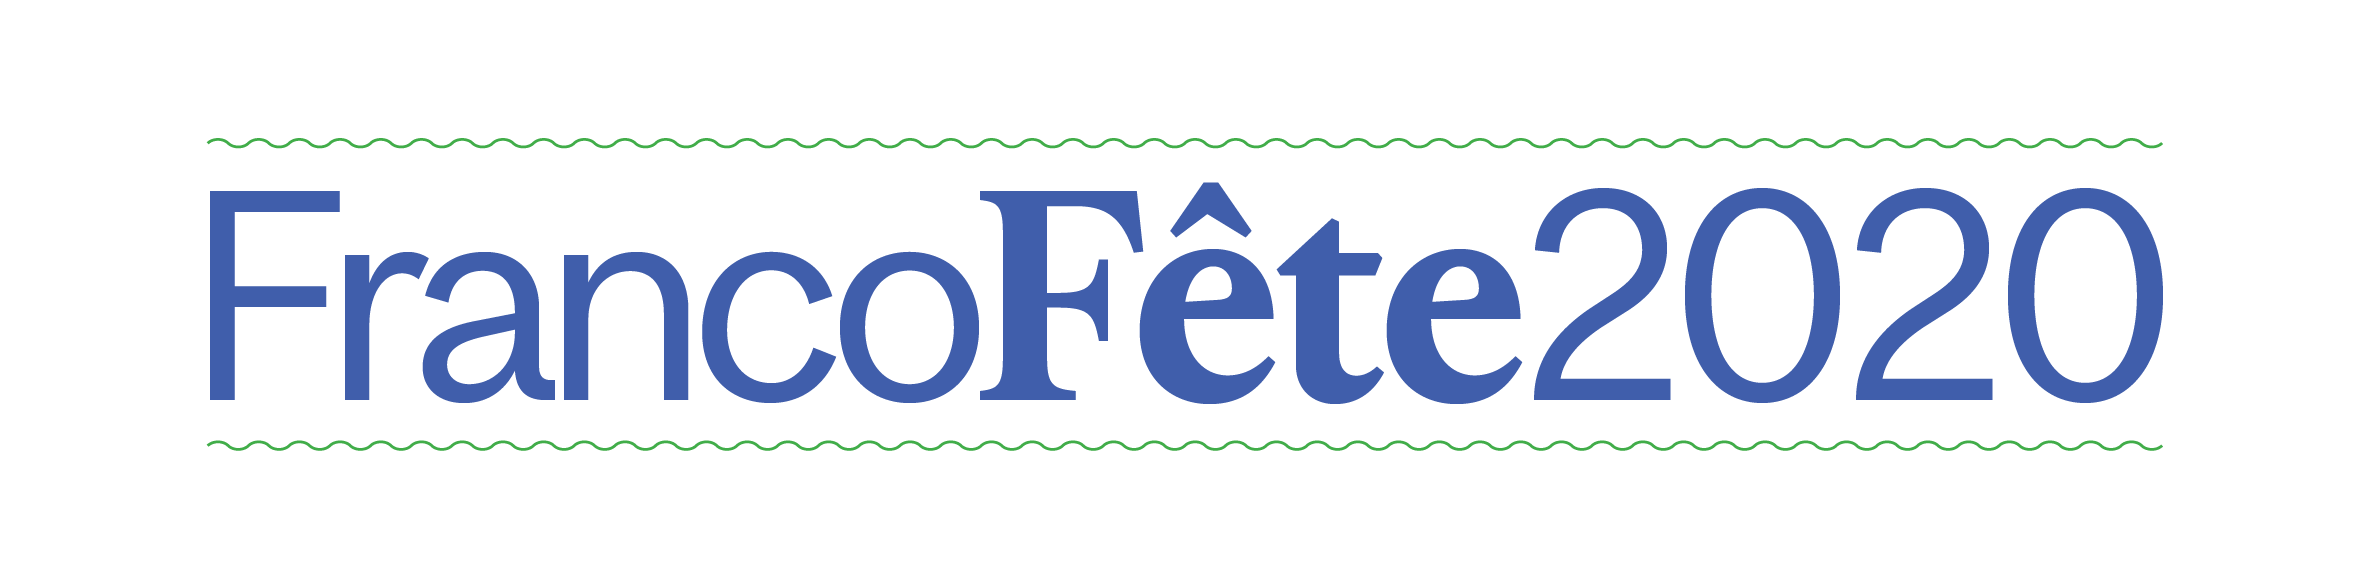 Francofête logo